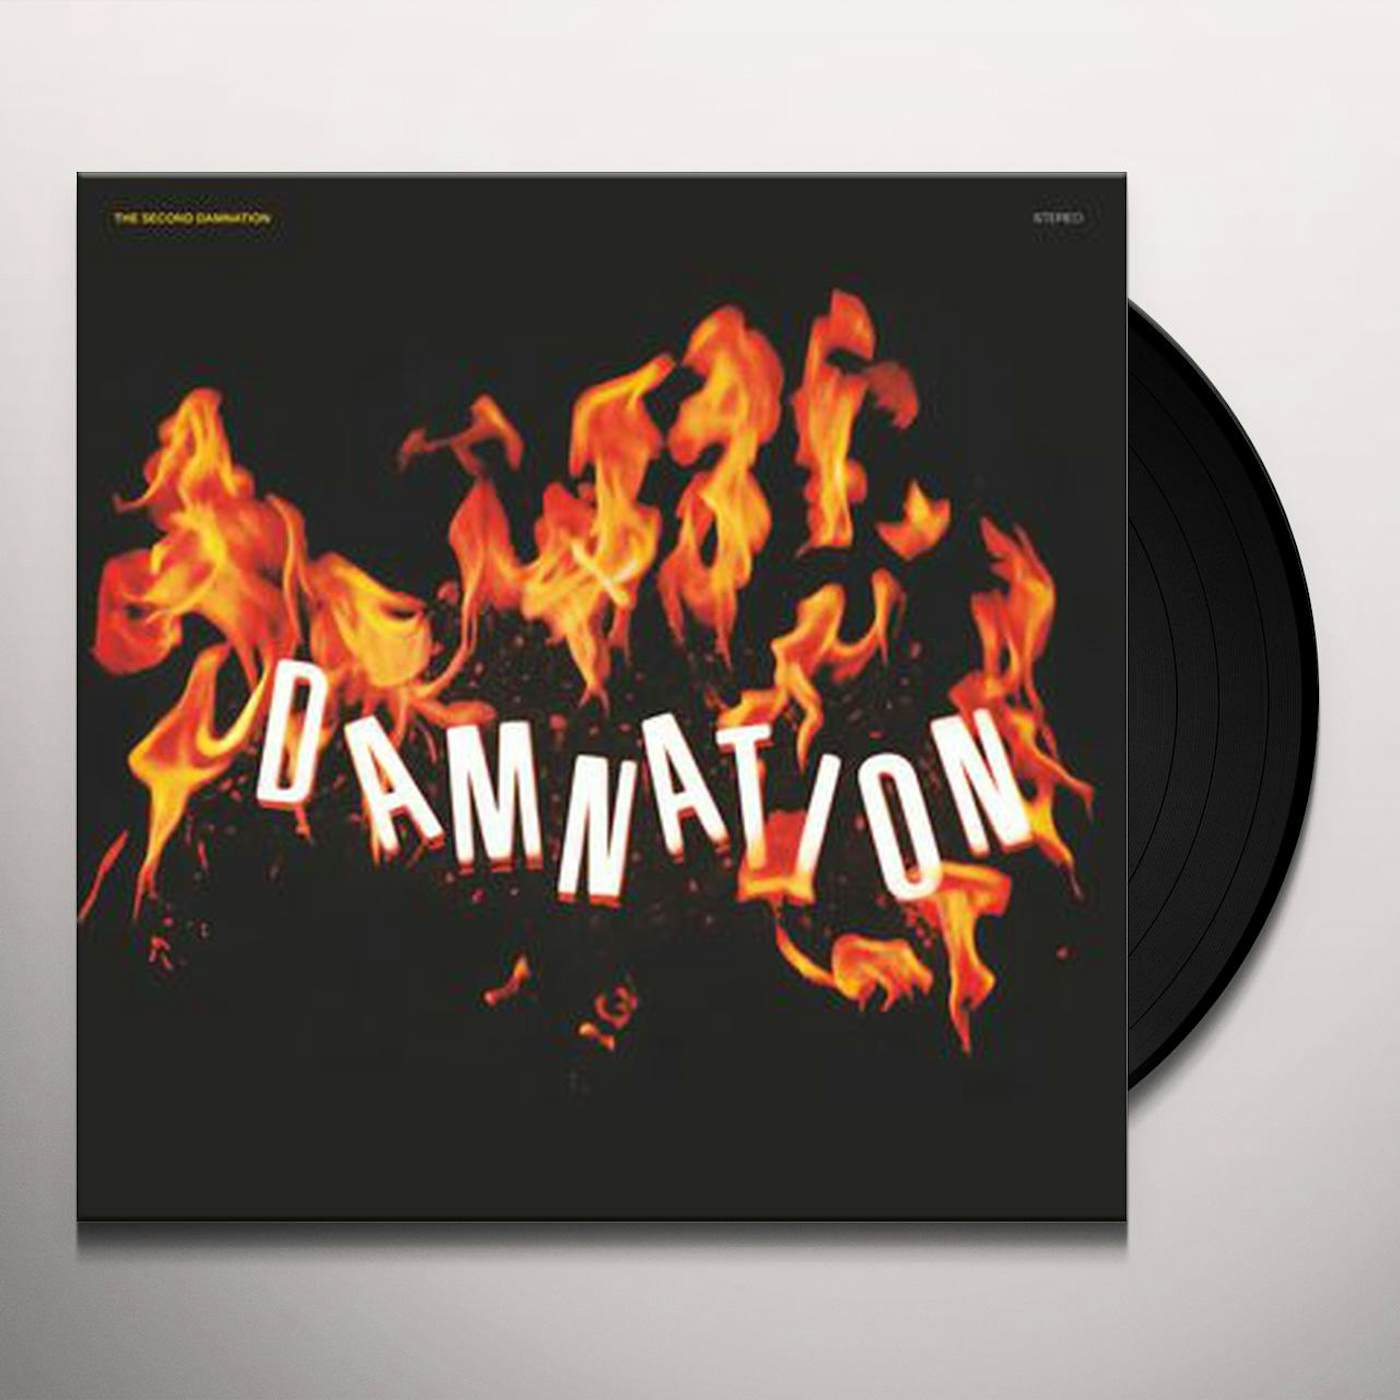 Damnation Of Adam SECOND DAMNATION Vinyl Record